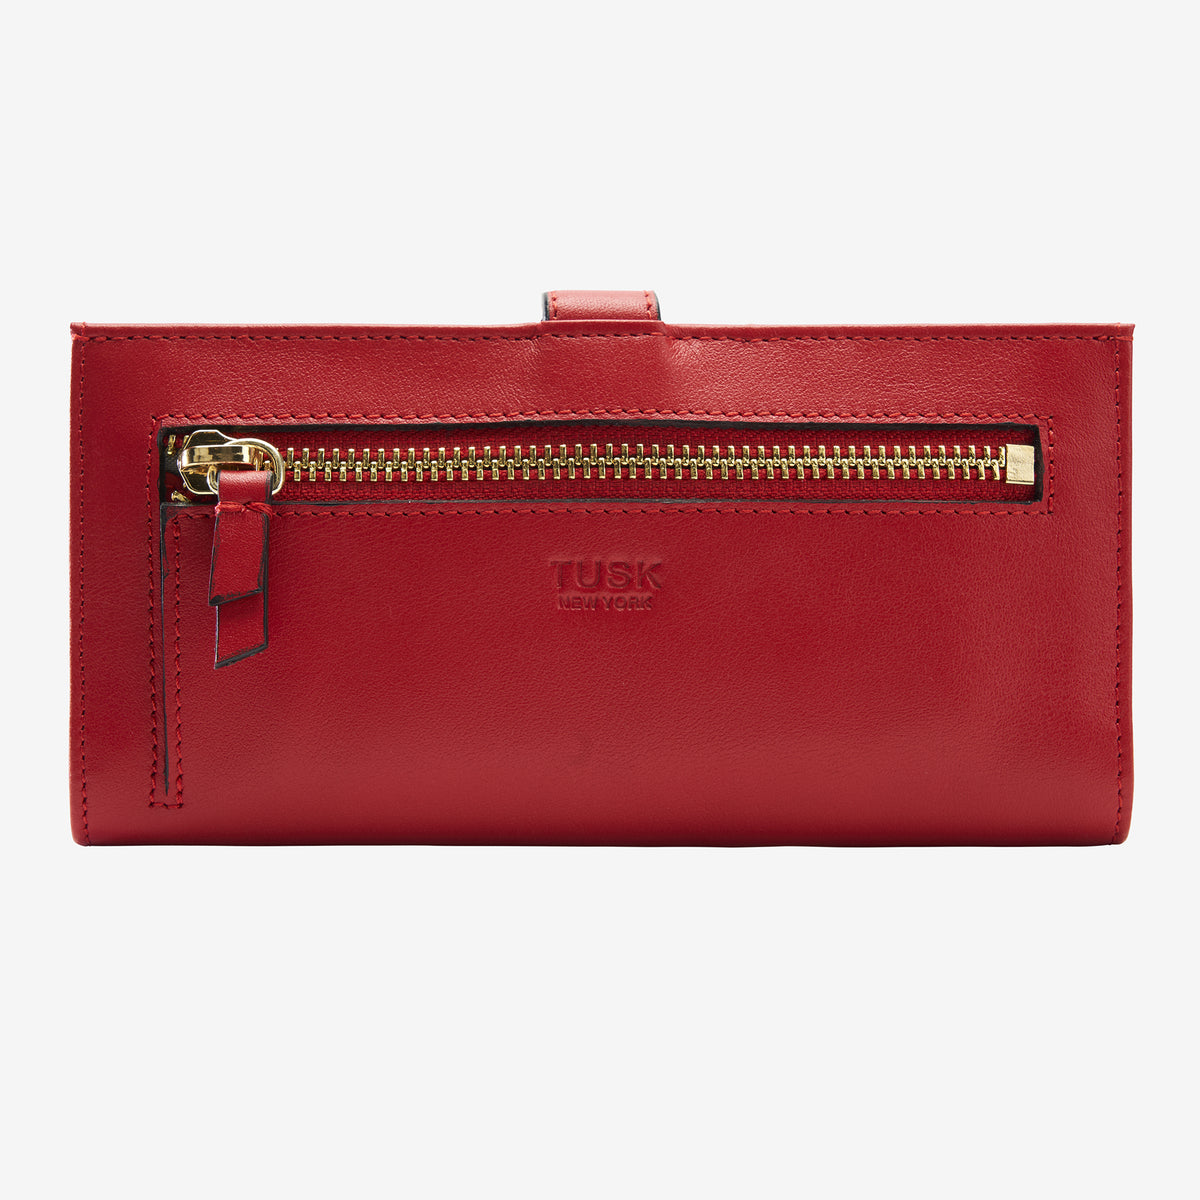 tusk-455-womens-slim-joy-leather-clutch-wallet-red-back